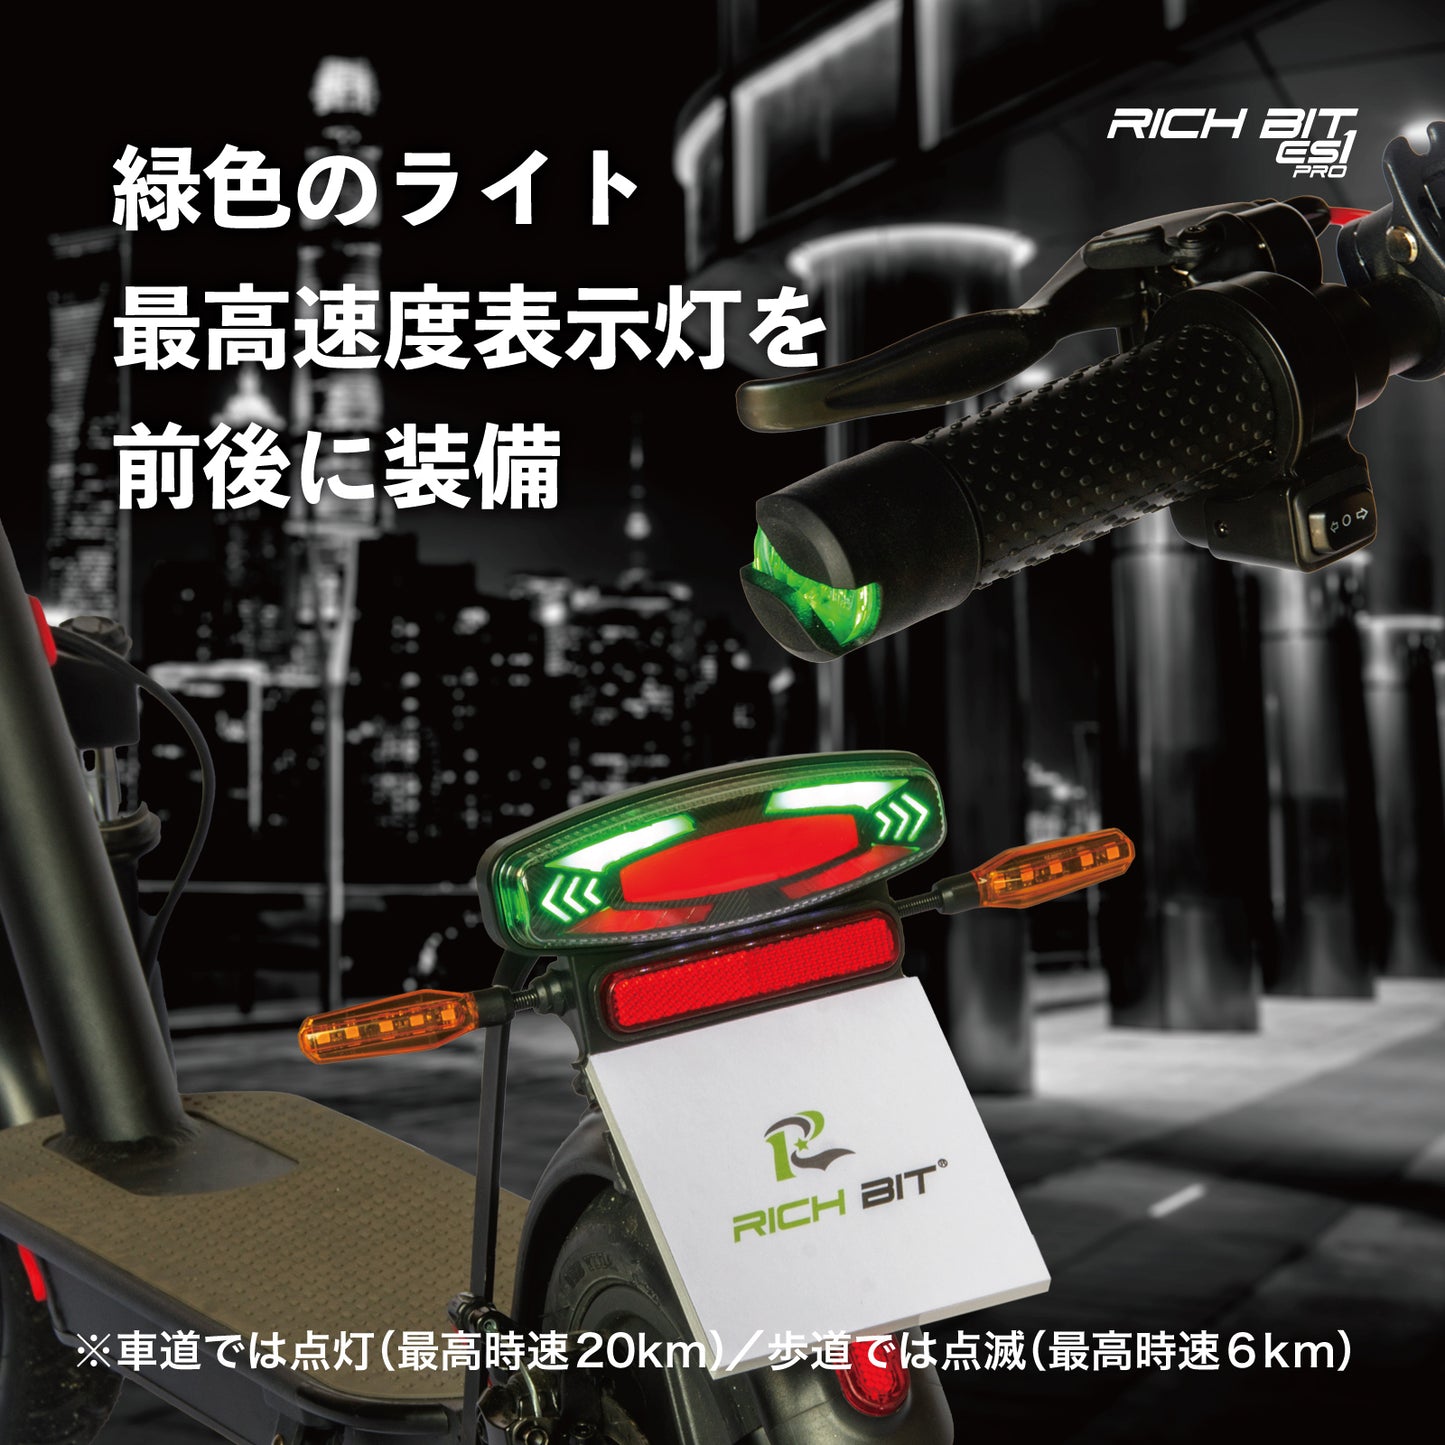 RICHBIT ES1 Pro★特定小型原動機付自転車モデル【ホワイト】電動キックボード 公道/歩道走行可能 20km/h以下